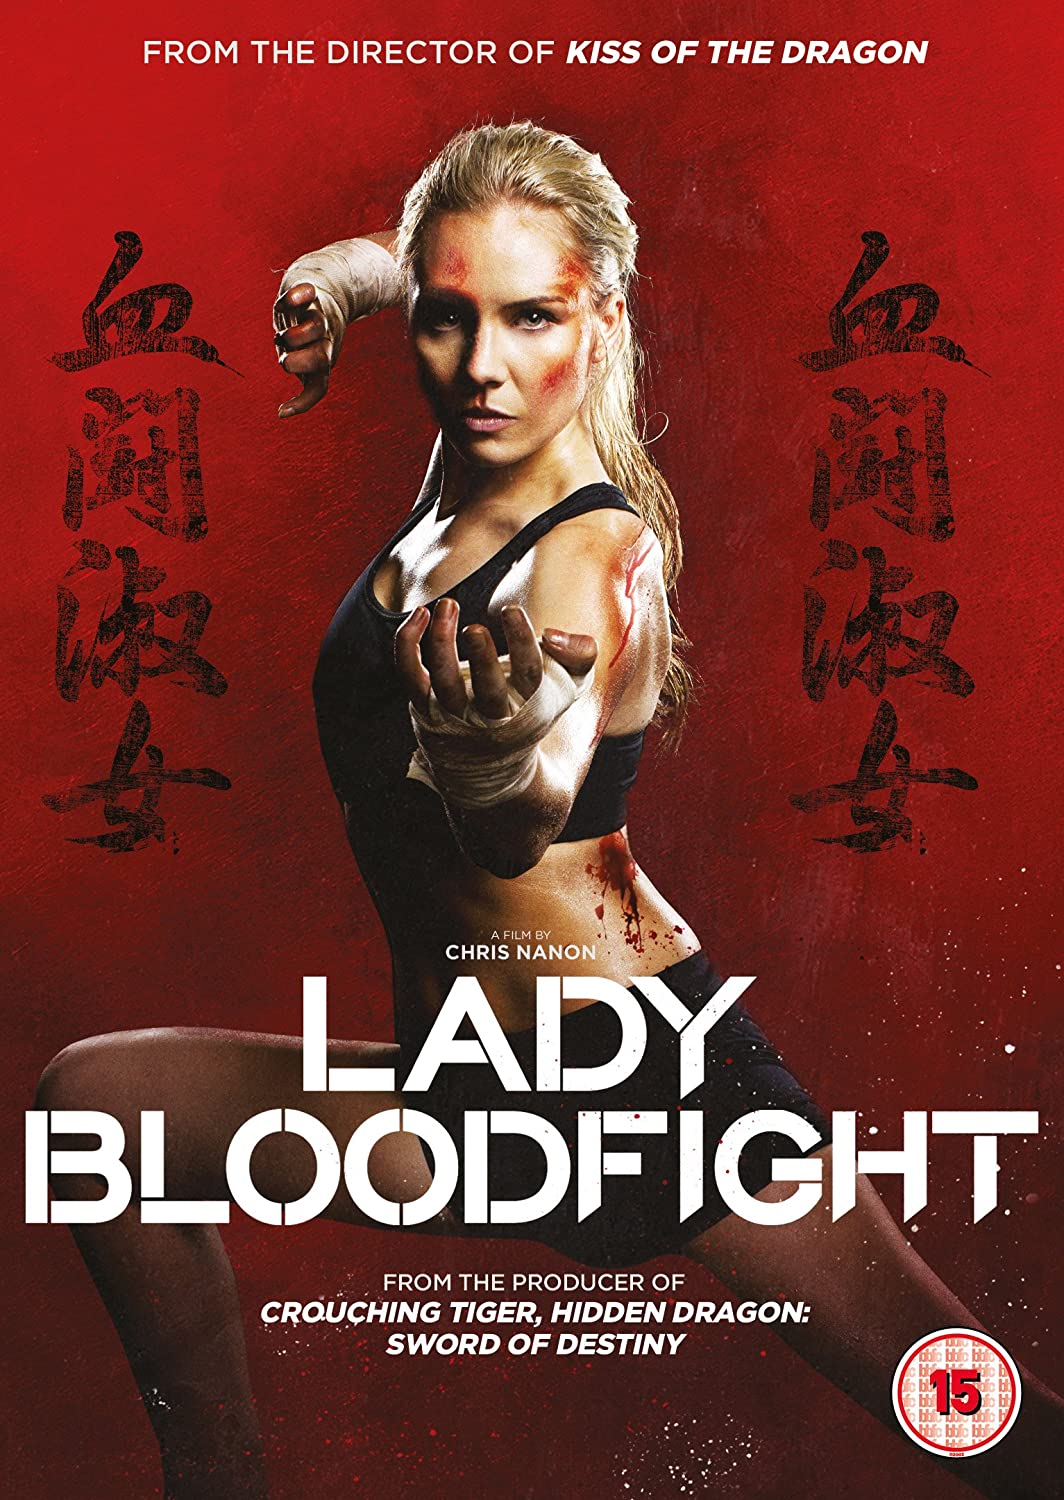 Lady Bloodfight - Action/Drama [DVD]